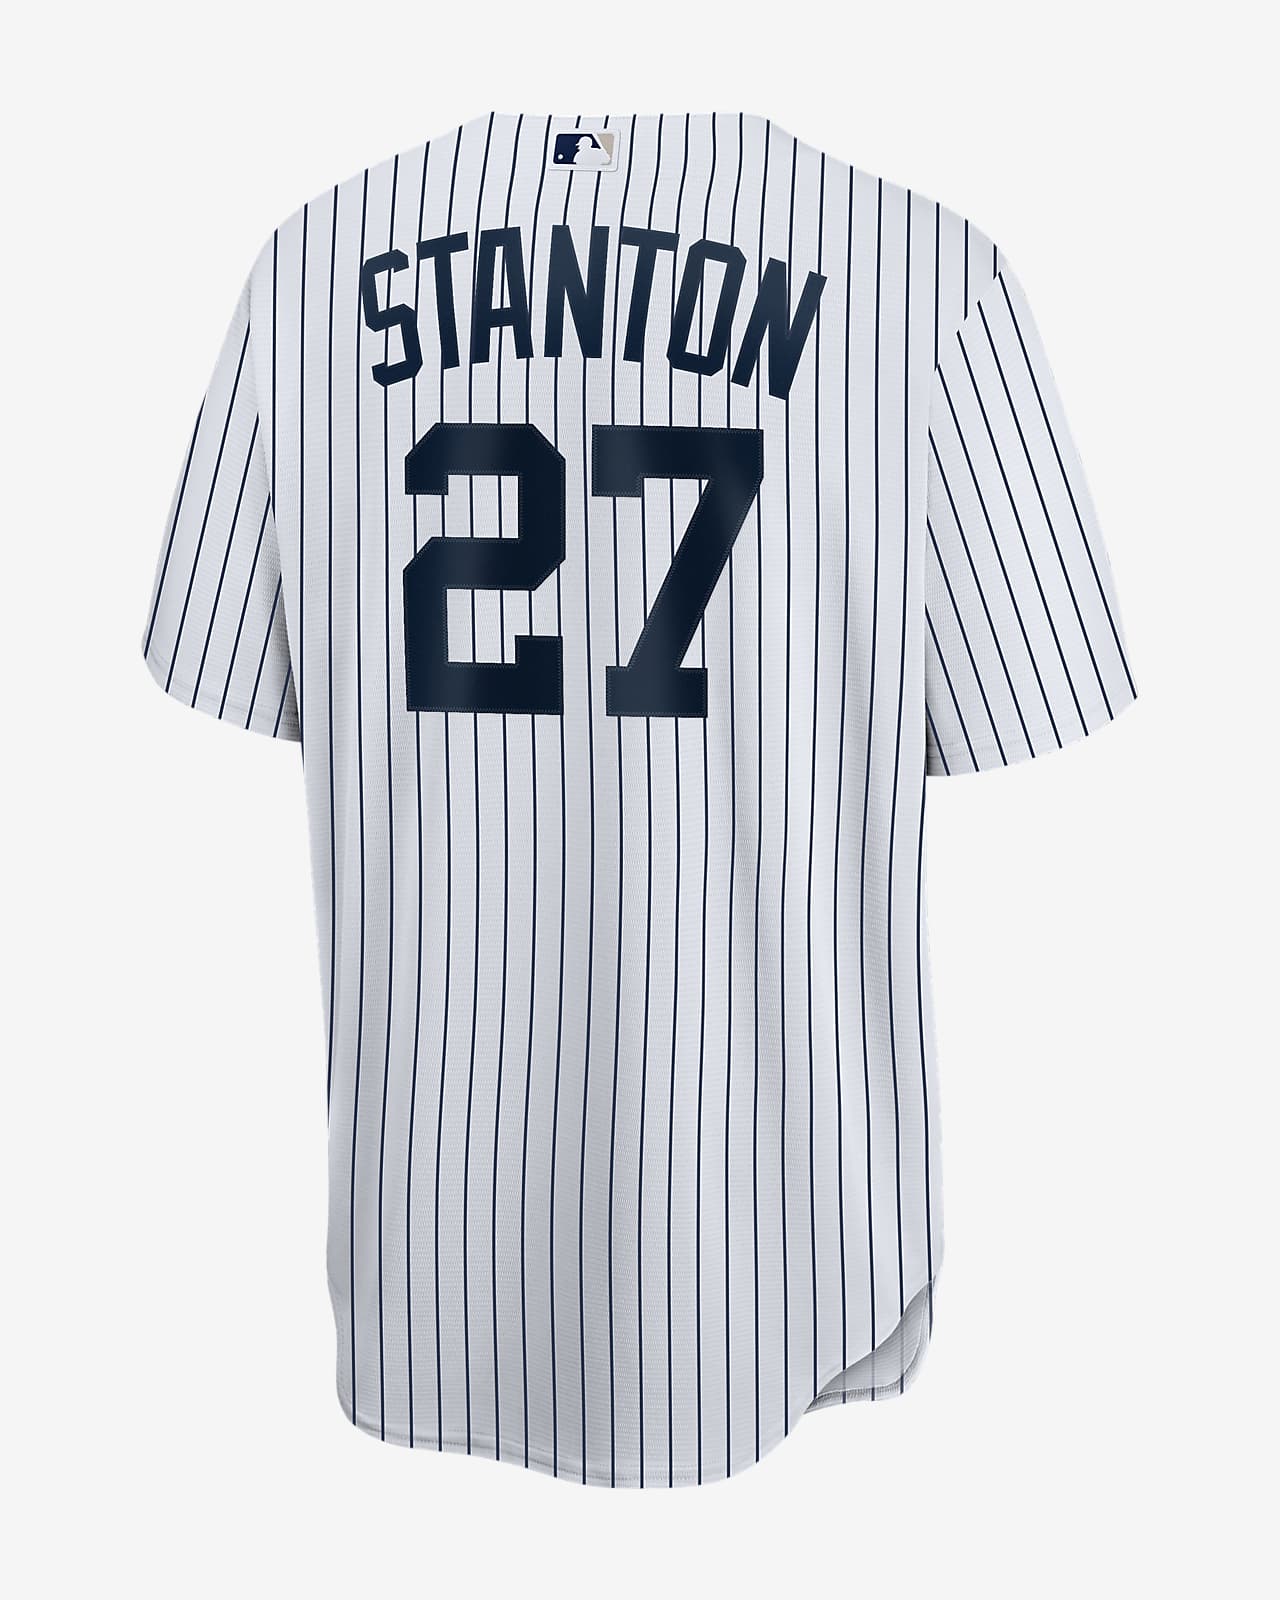 MLB New York Yankees (Giancarlo Stanton) Men's Replica Baseball